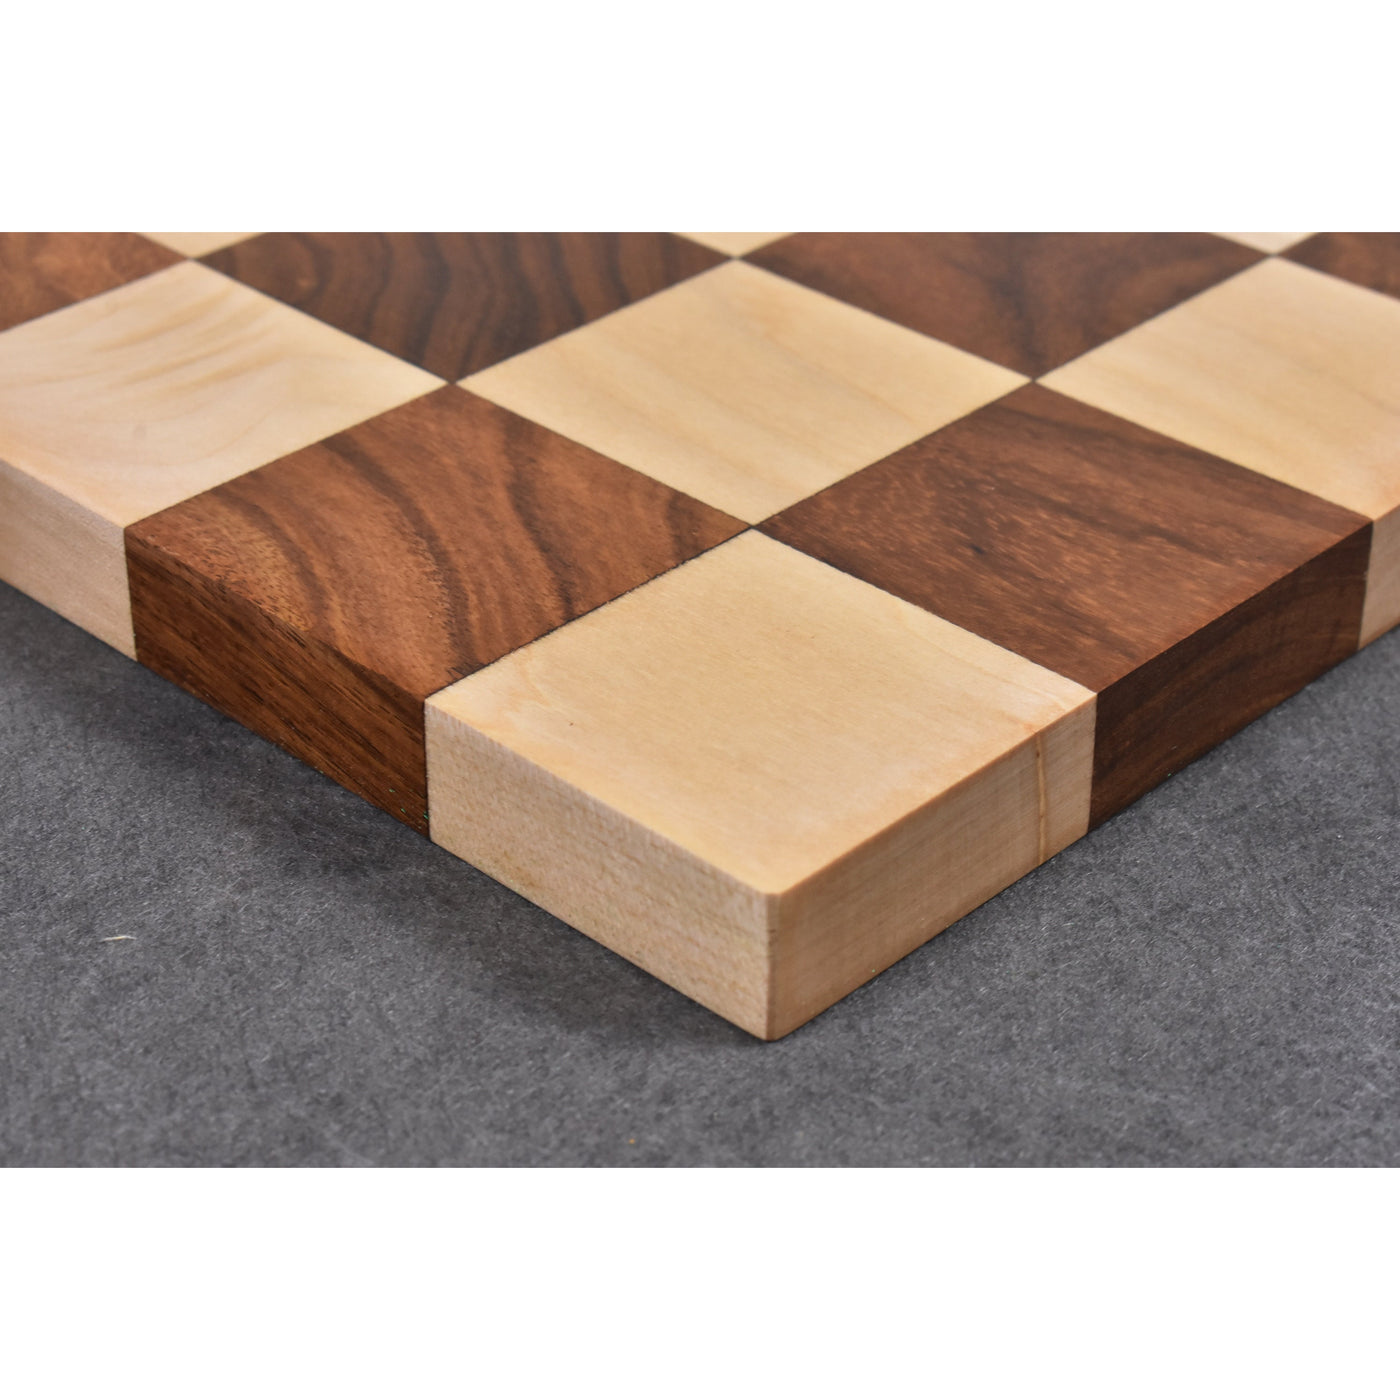 Slightly Imperfect Borderless Hardwood End Grain Chess Board